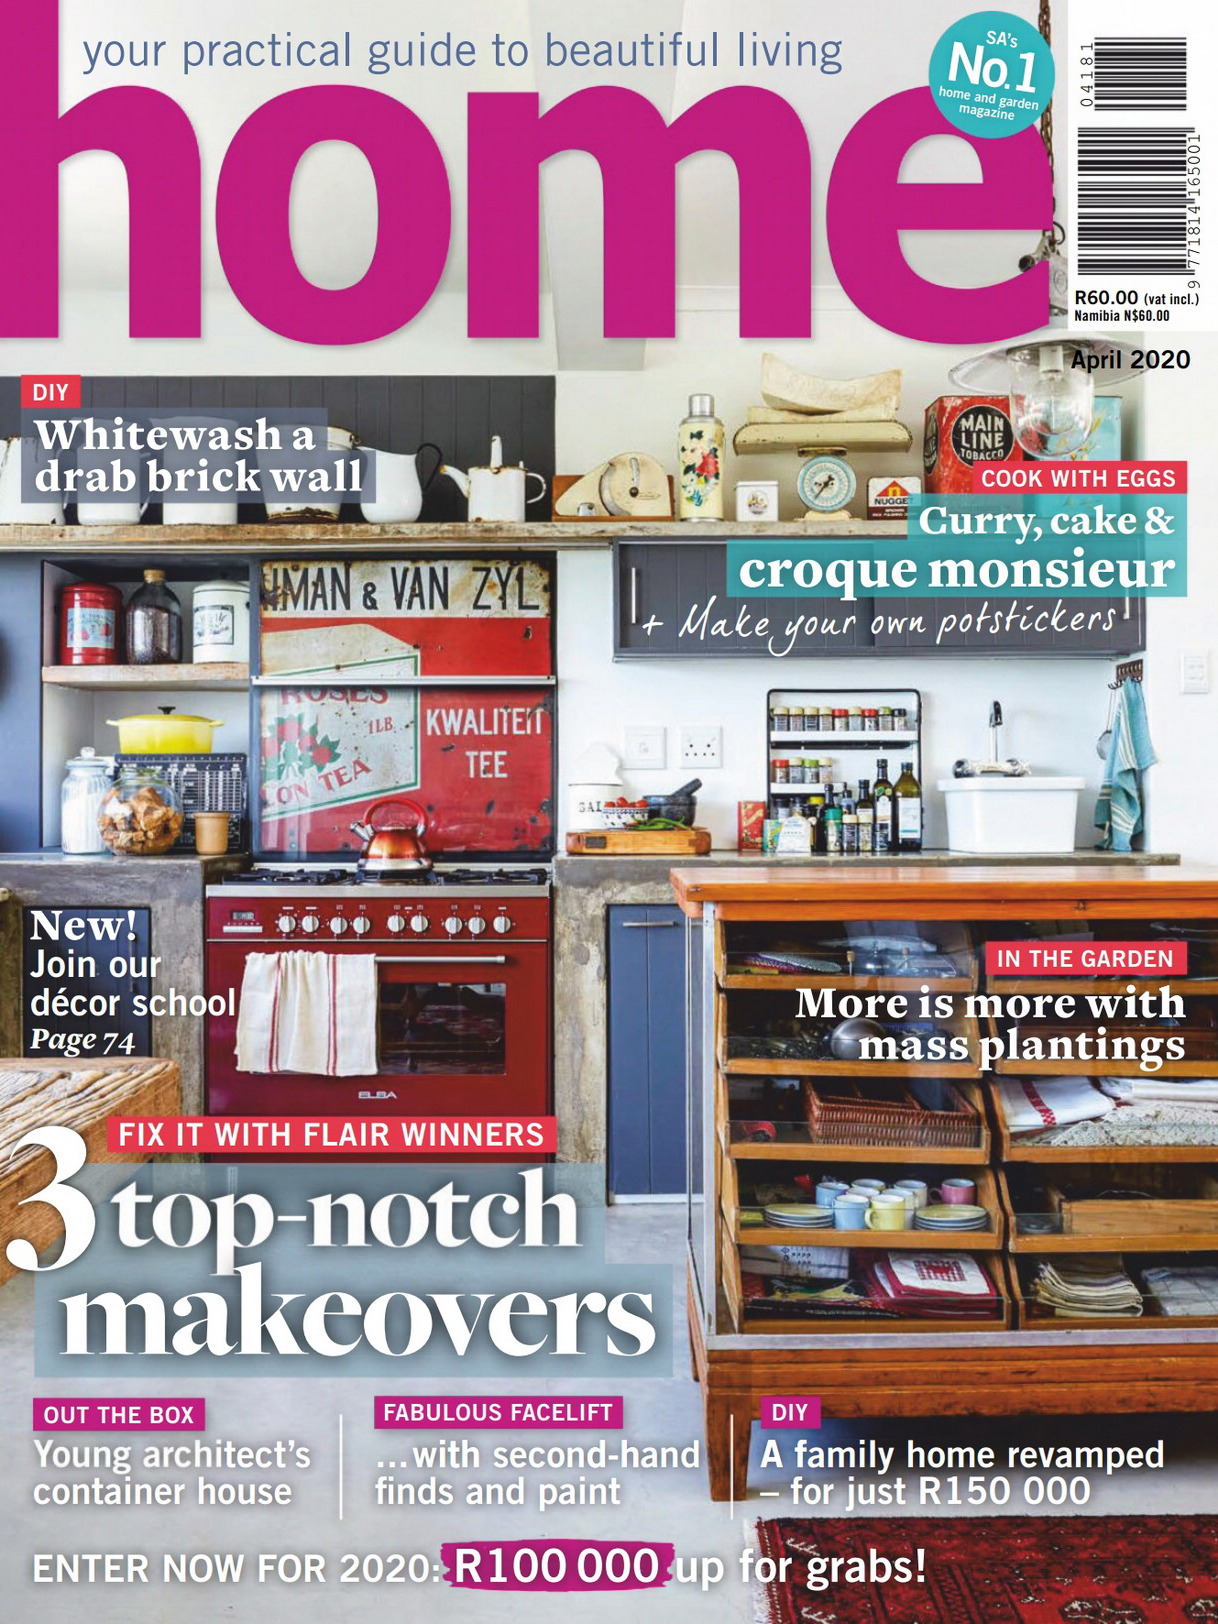 《Home》南非版时尚家居杂志2020年04月号